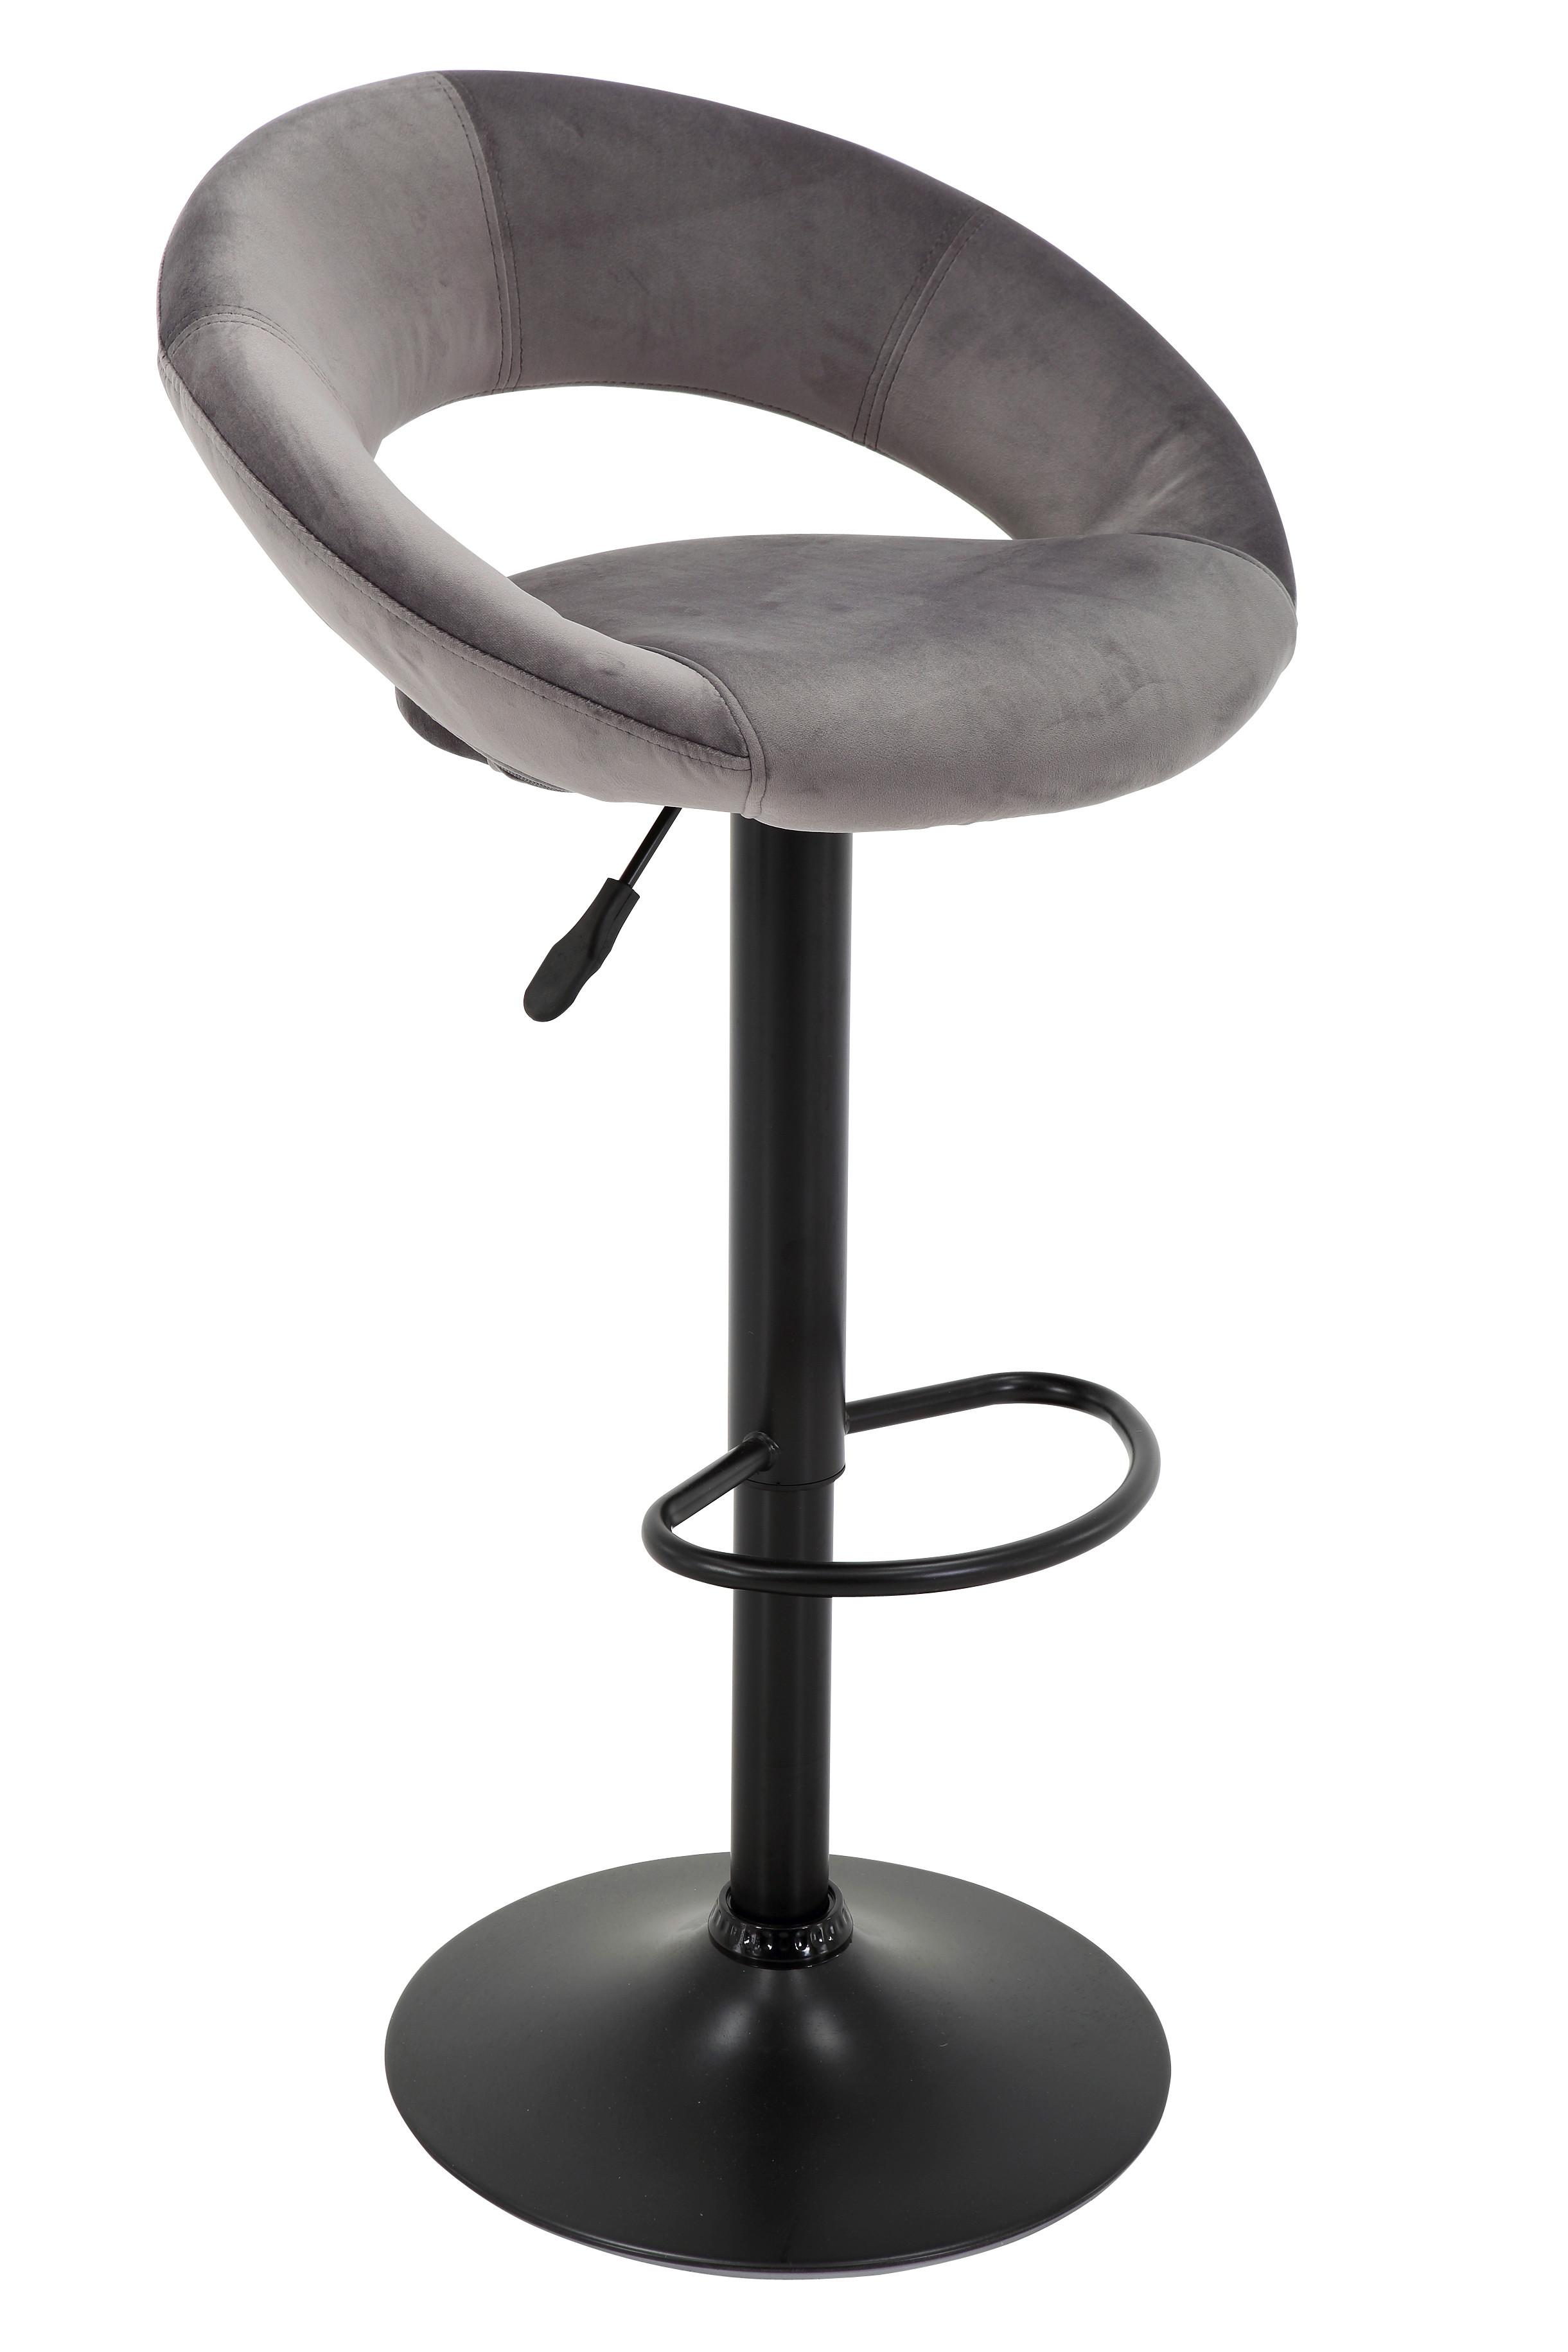 Barová Židle Walker - šedá/černá, Moderní, kov/textil (56/82-103/50cm) - Modern Living